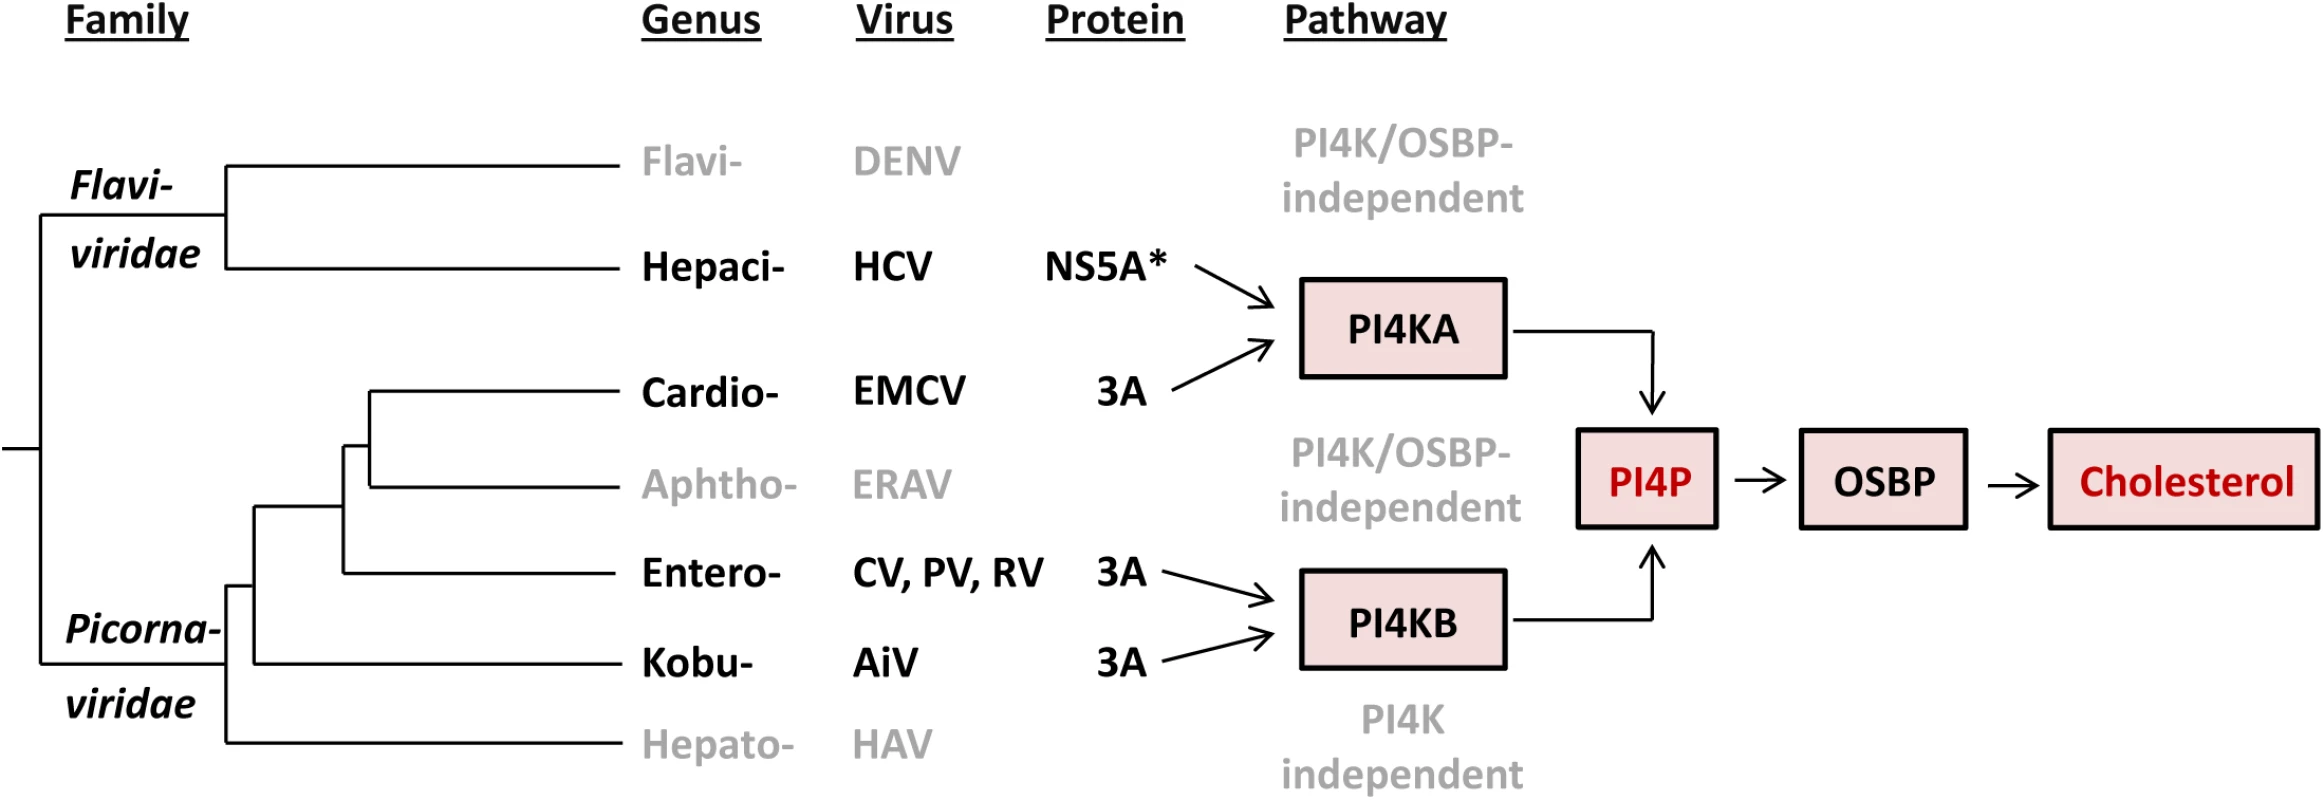 Evolution of the recruitment of lipid-modulating pathways by picorna- and flaviviruses.